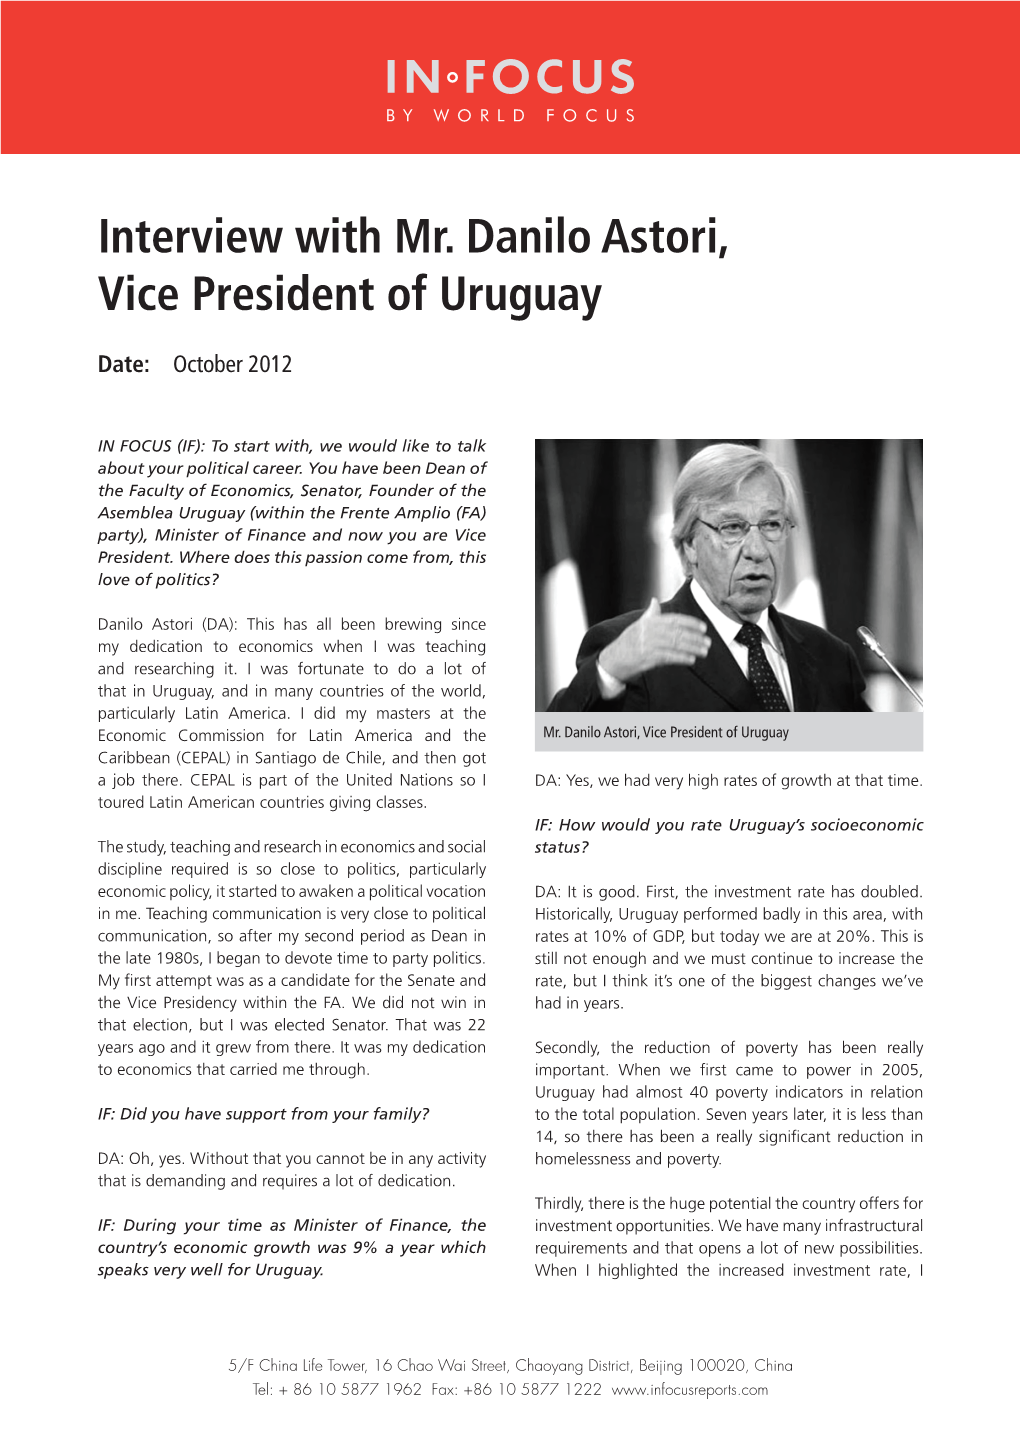 Interview with Mr. Danilo Astori, Vice President of Uruguay